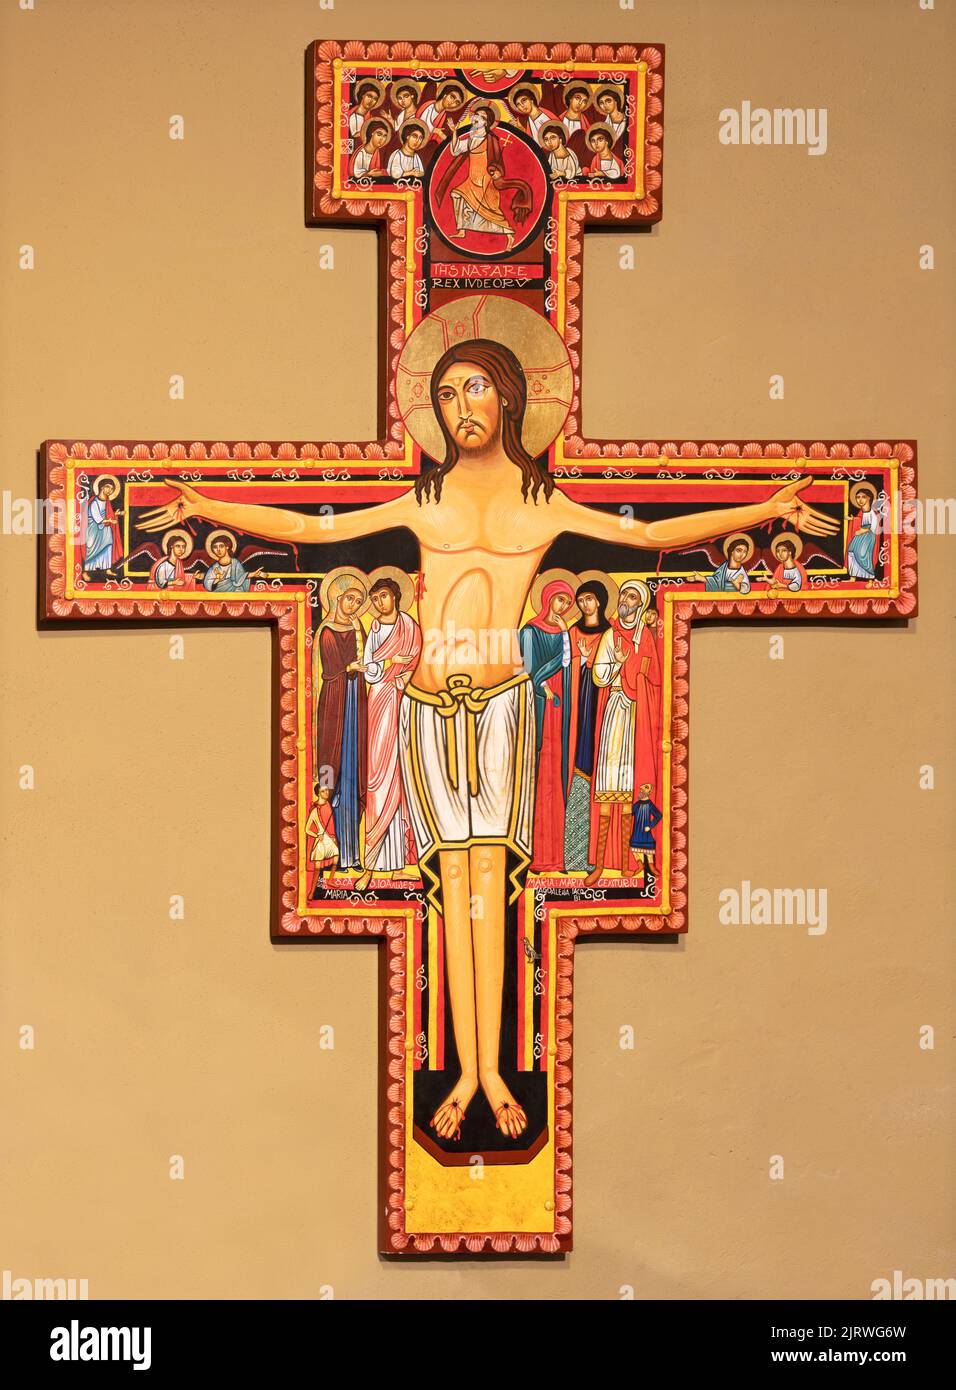 VARALLO, ITALY - JULY 17, 2022: The icon of Jesus on the cross in the church Collegiata di San Gaudenzio by unknonwn artist. Stock Photo